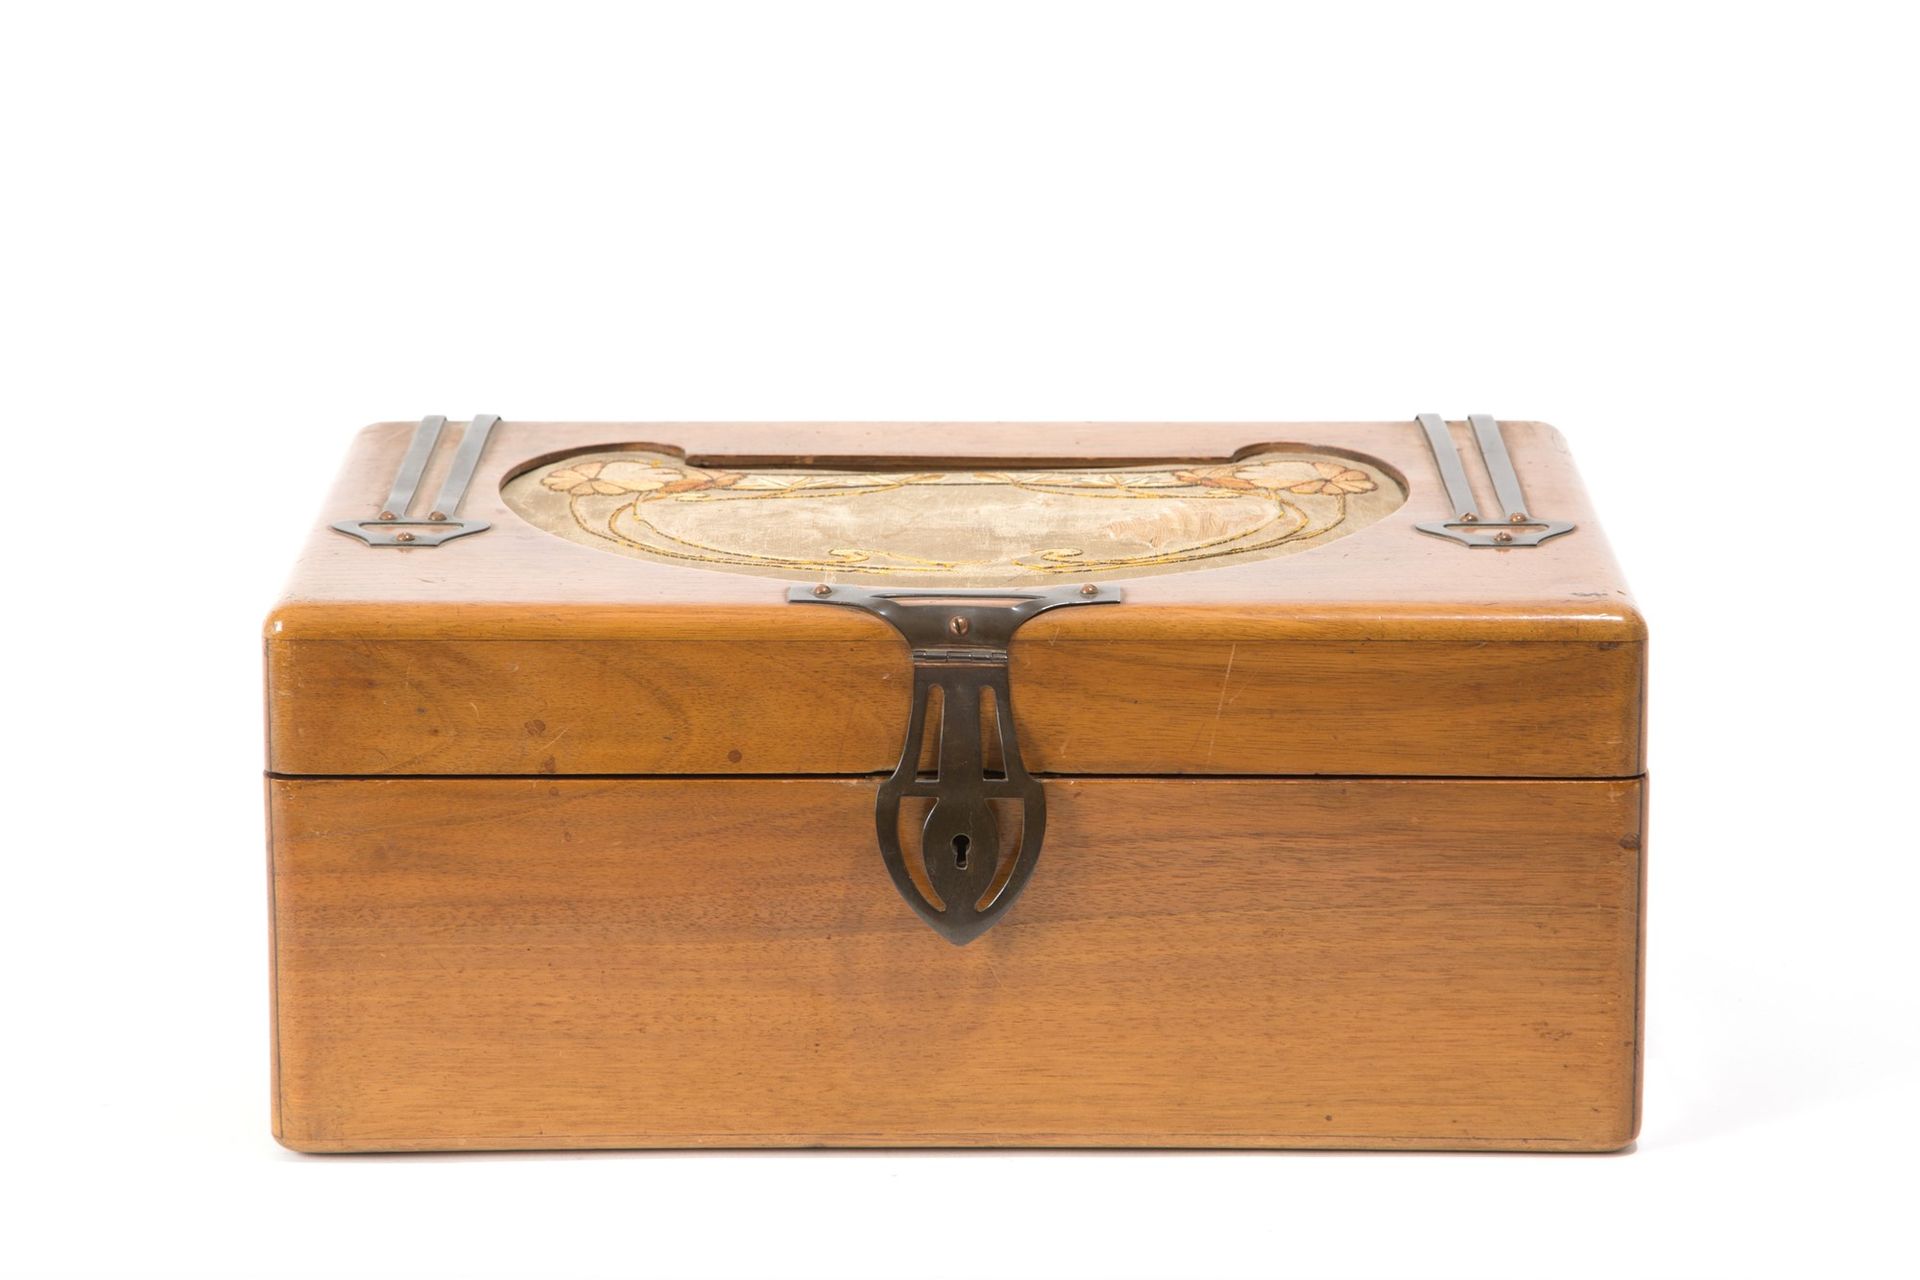 Wooden box 胡桃木和黄铜棺材，中间有小圆点。新艺术运动时期。缺少一个手柄。16x39x24厘米左右。